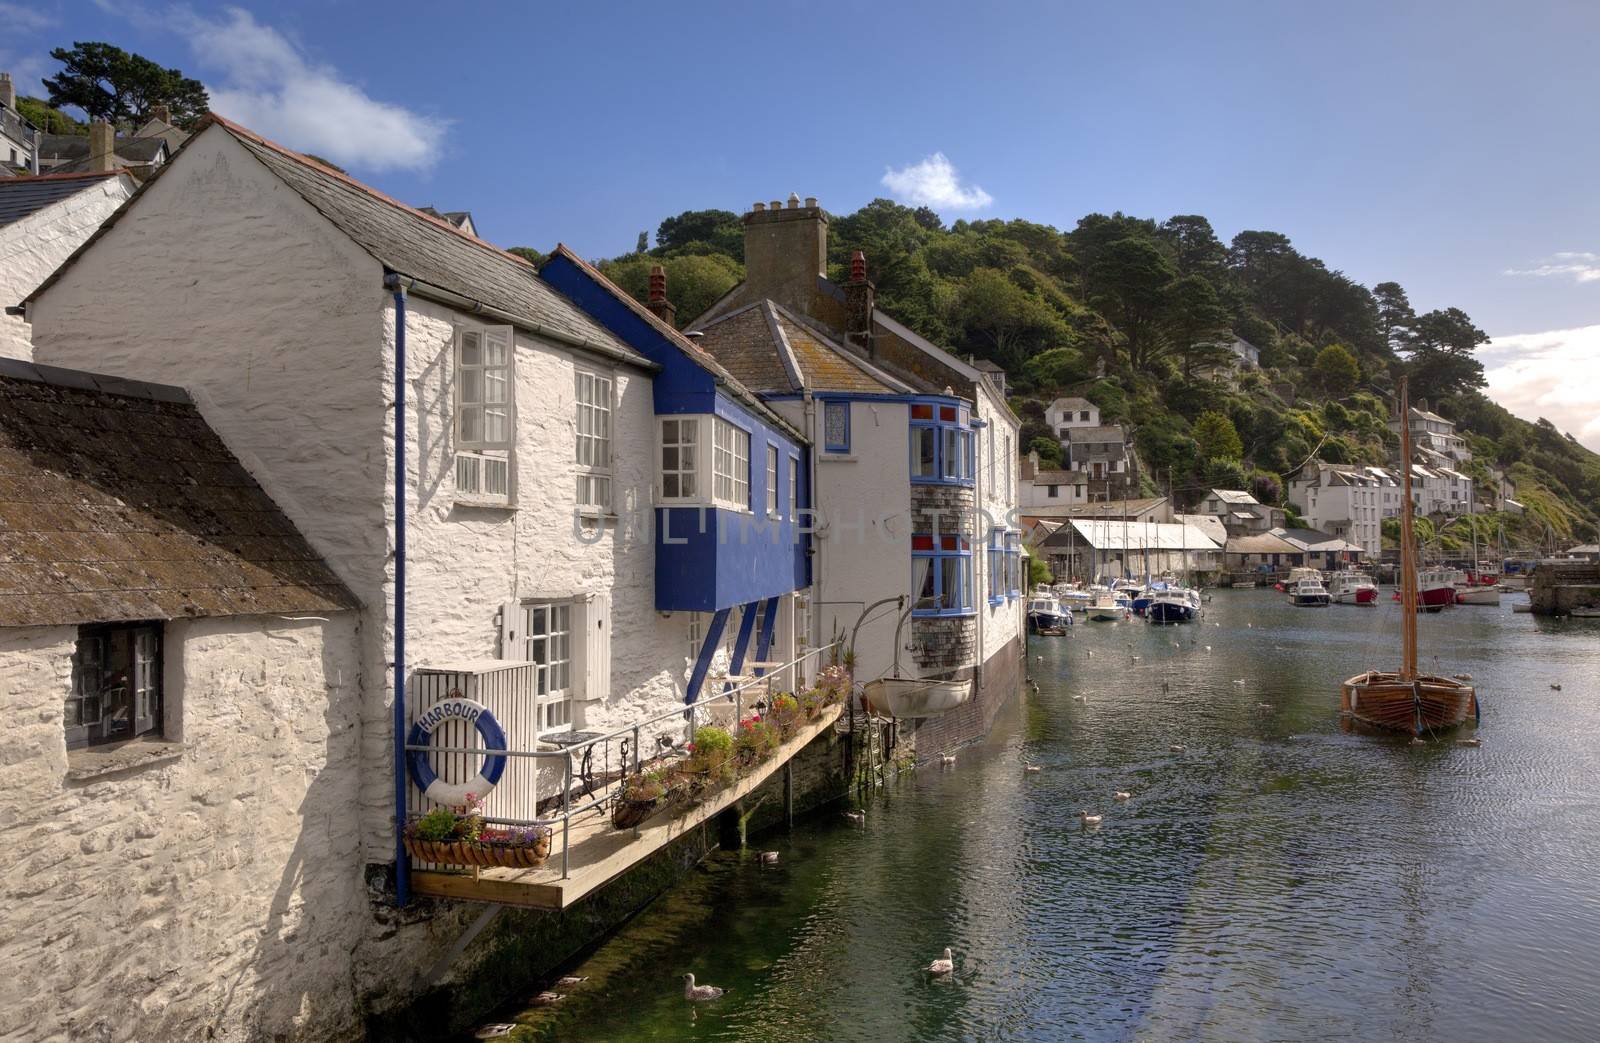 The popular holiday destination of Polperro in summer, Cornwall, England.